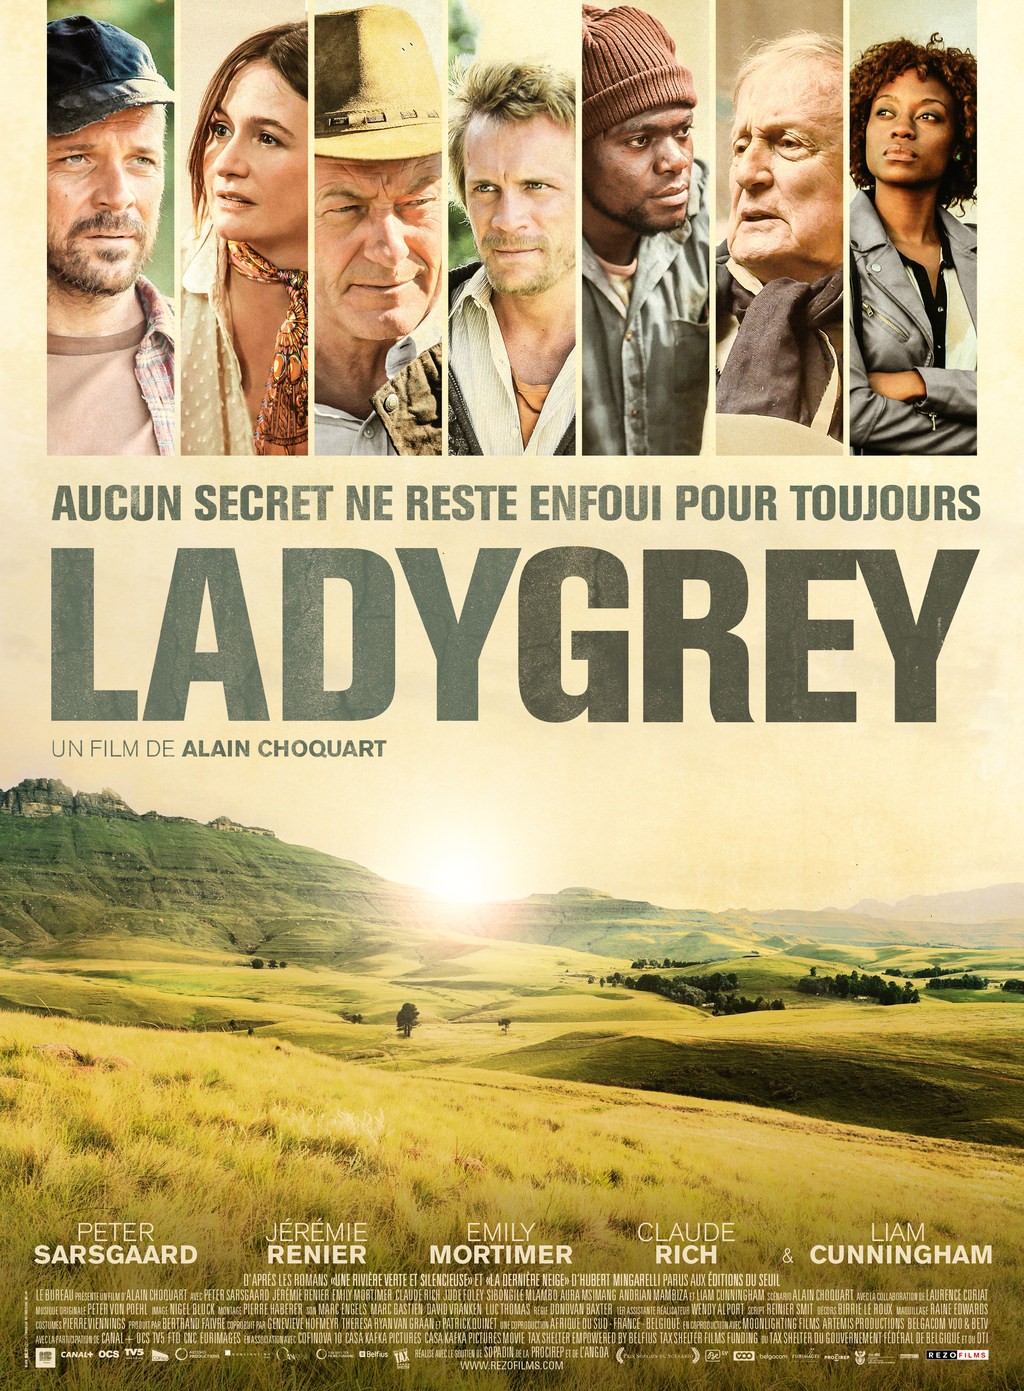 Extra Large Movie Poster Image for Ladygrey 